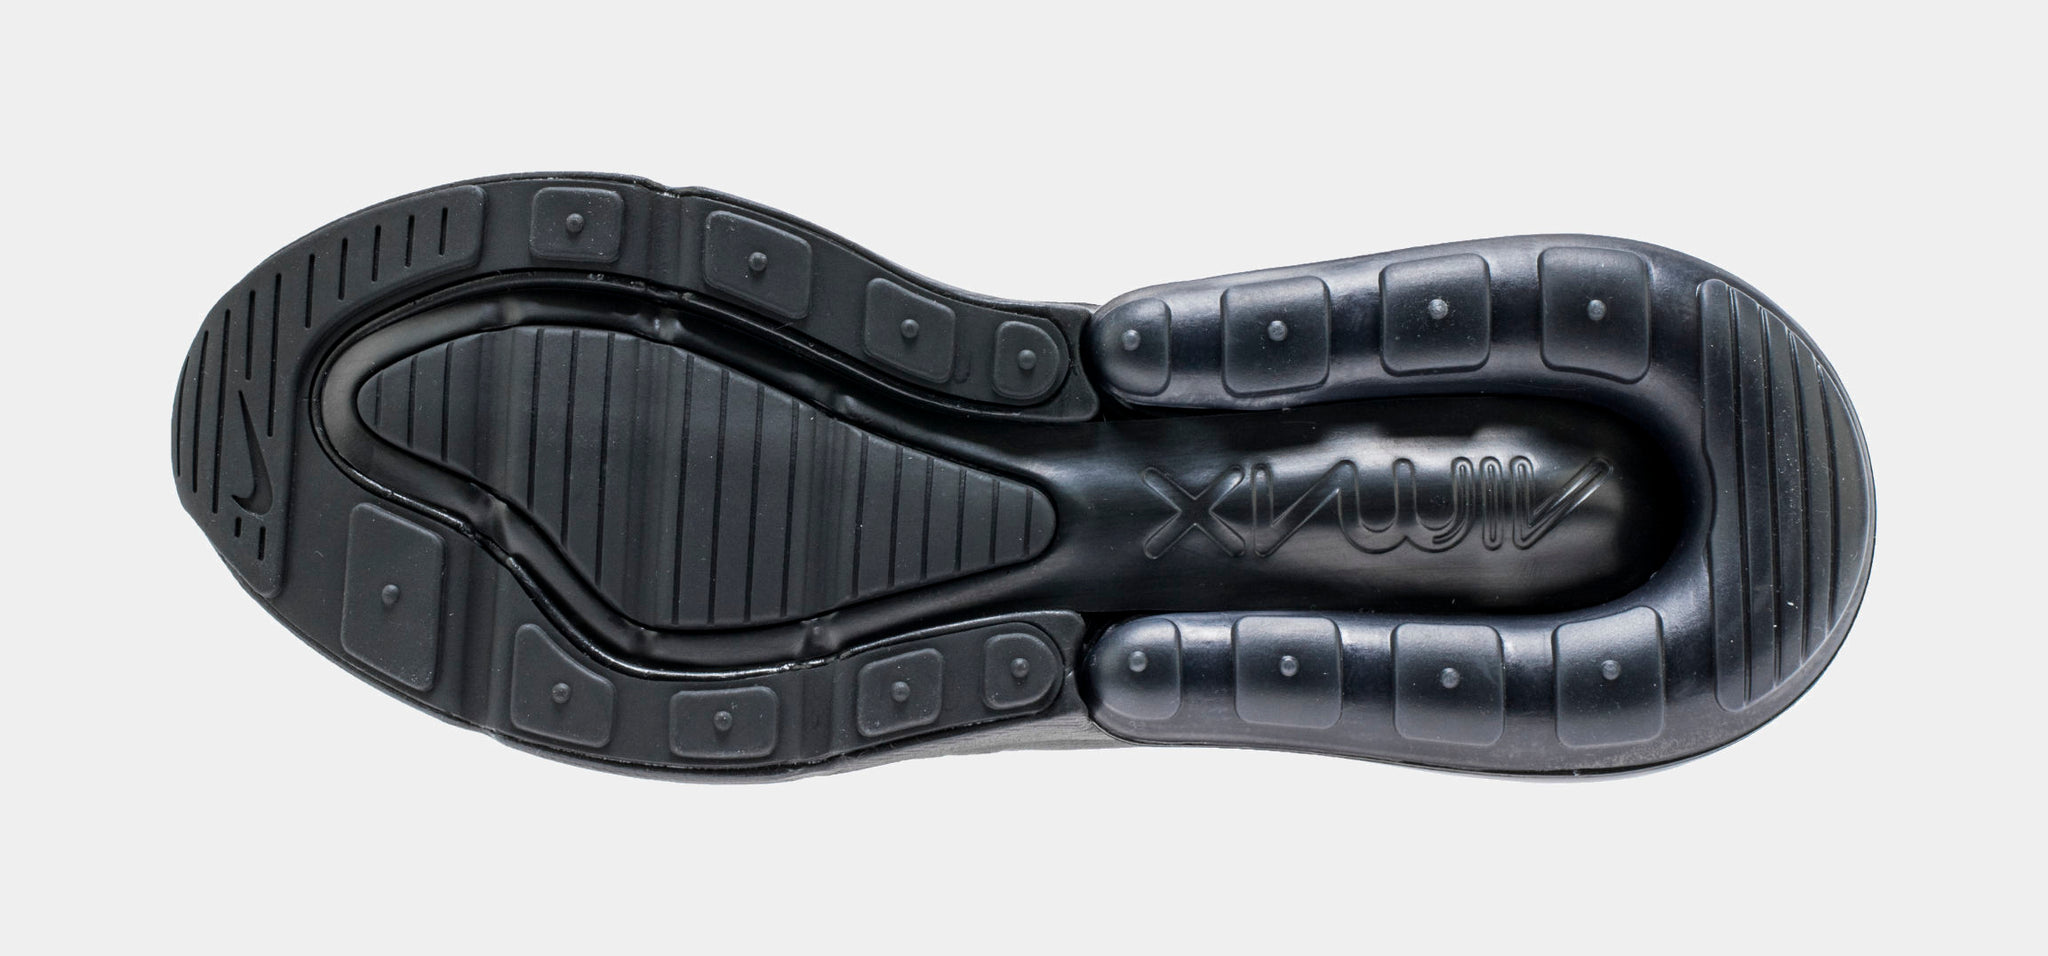 Nike Air Max 270 Mens Lifestyle Shoes Black AH8050-005 – Shoe Palace